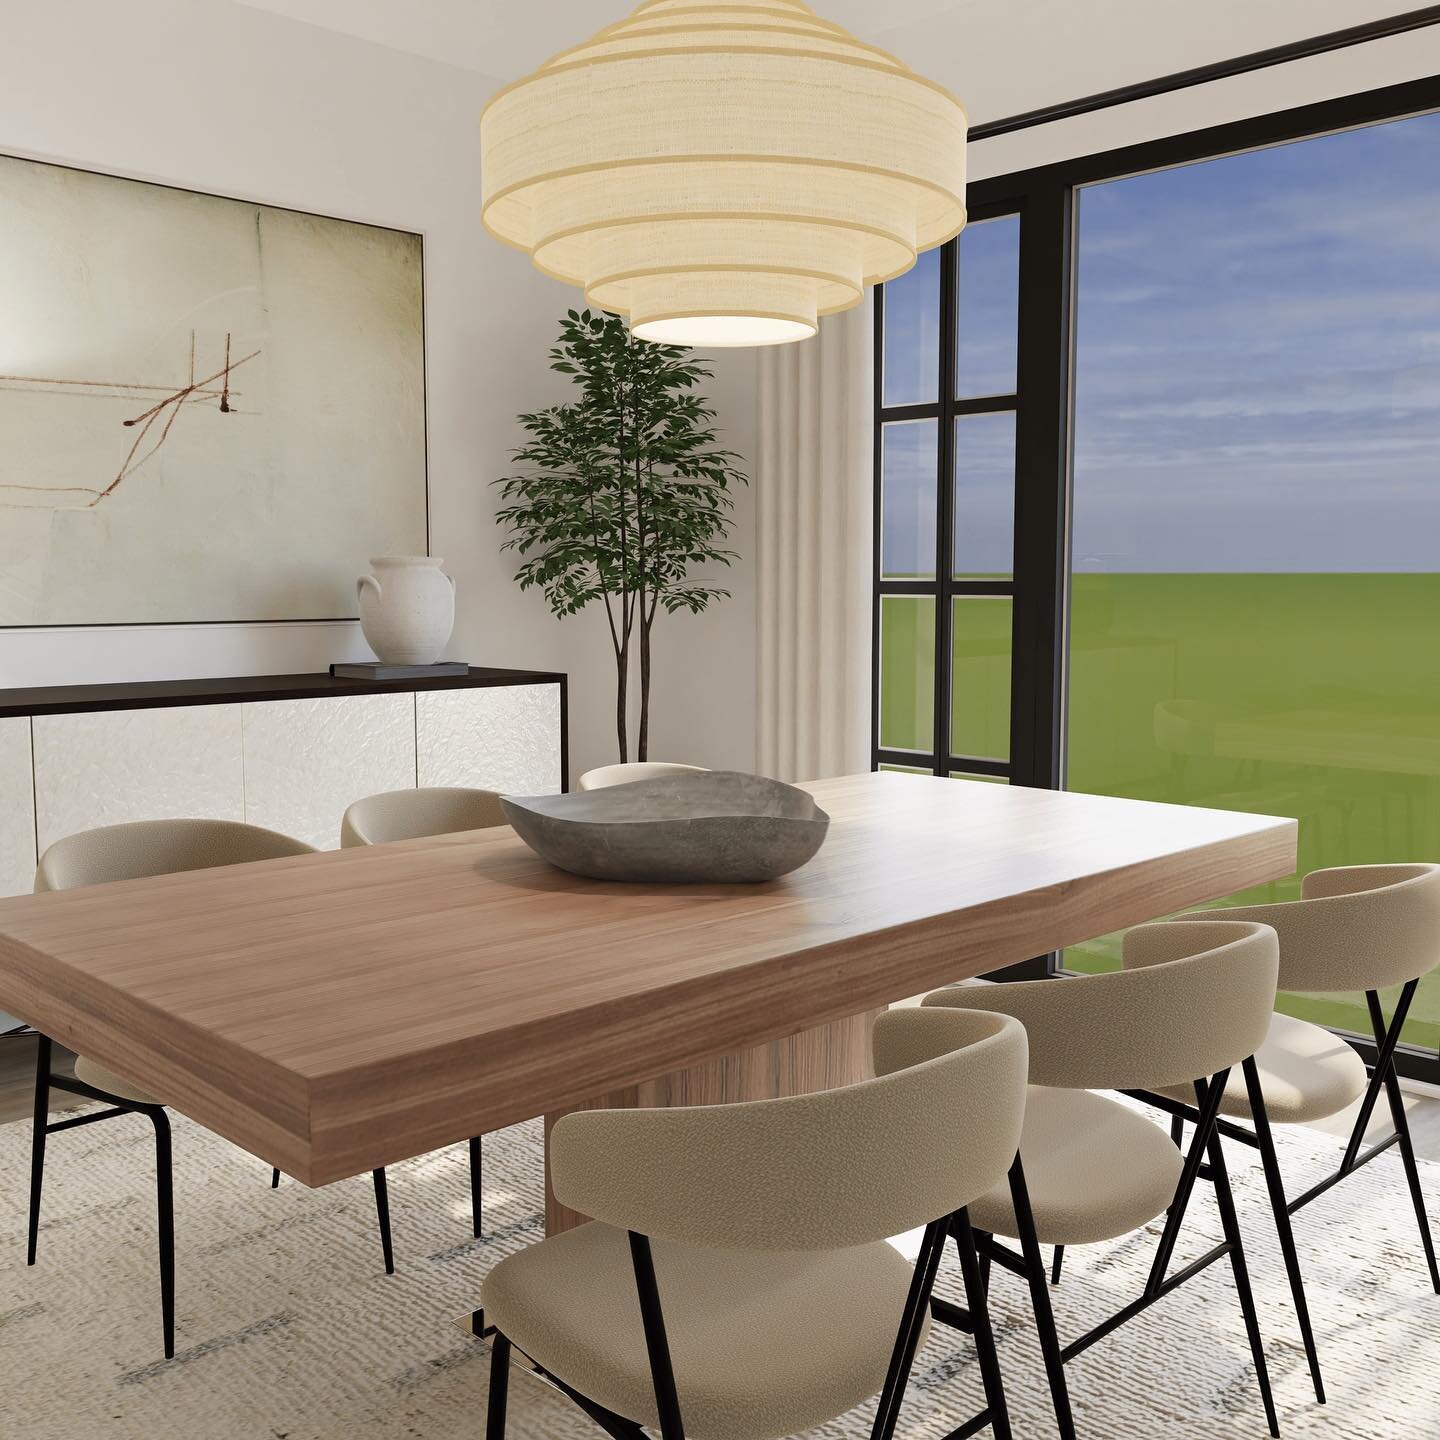 The design vs. The inspiration 😍

#interiorinspo #homedecor #interiordesign #diningroom #neutraldecor #summeriscoming #naturalinteriorstyles #diningtabledecor